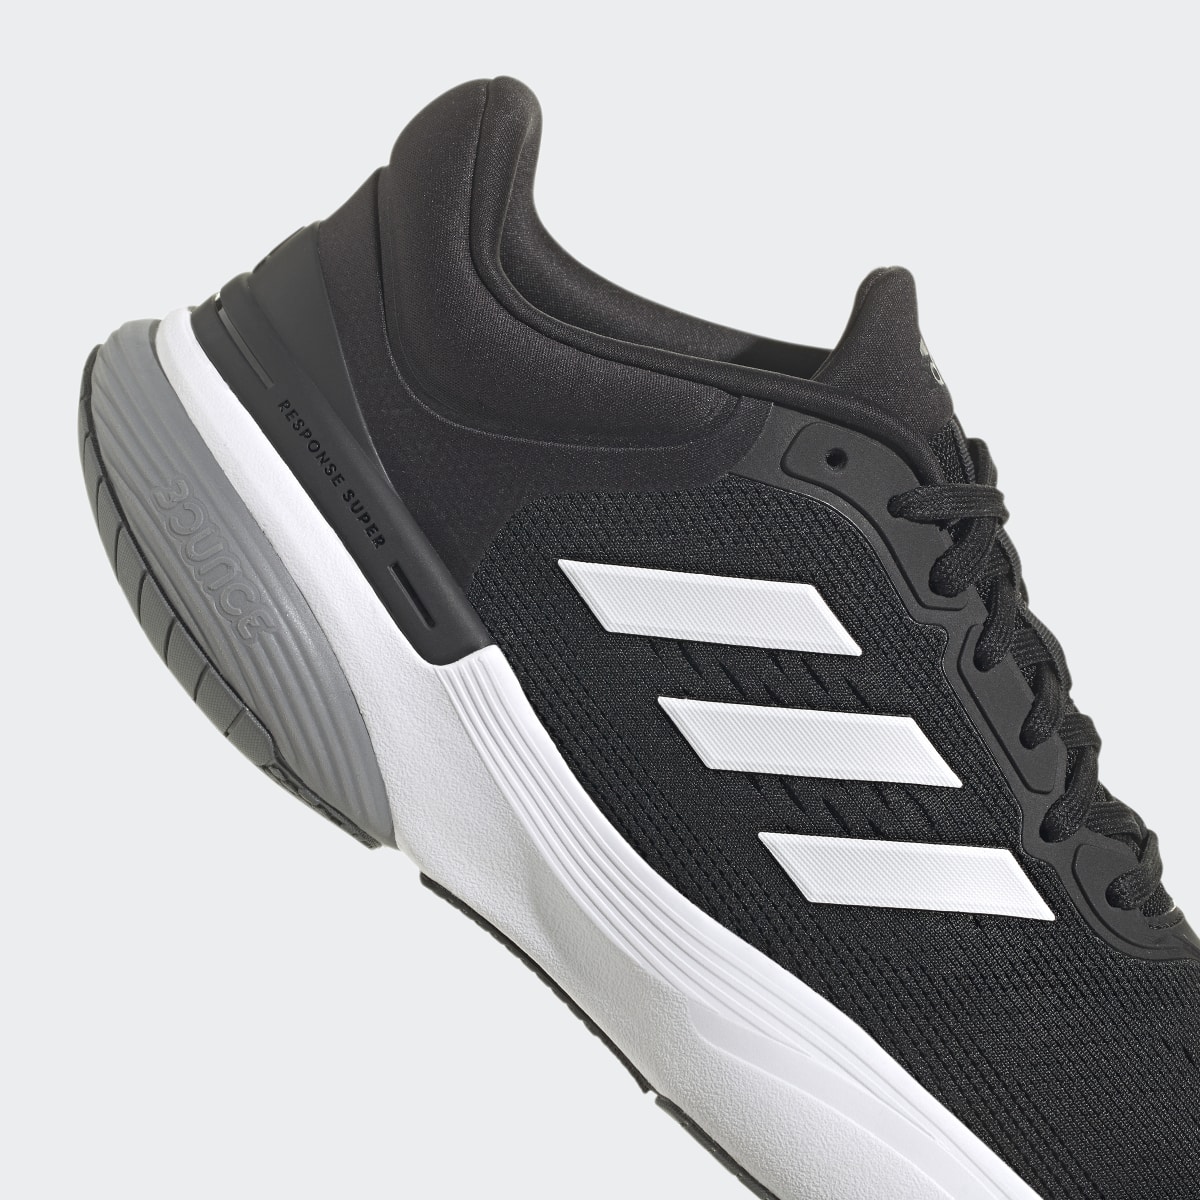 Adidas Response Super 3.0 Running Shoes. 8